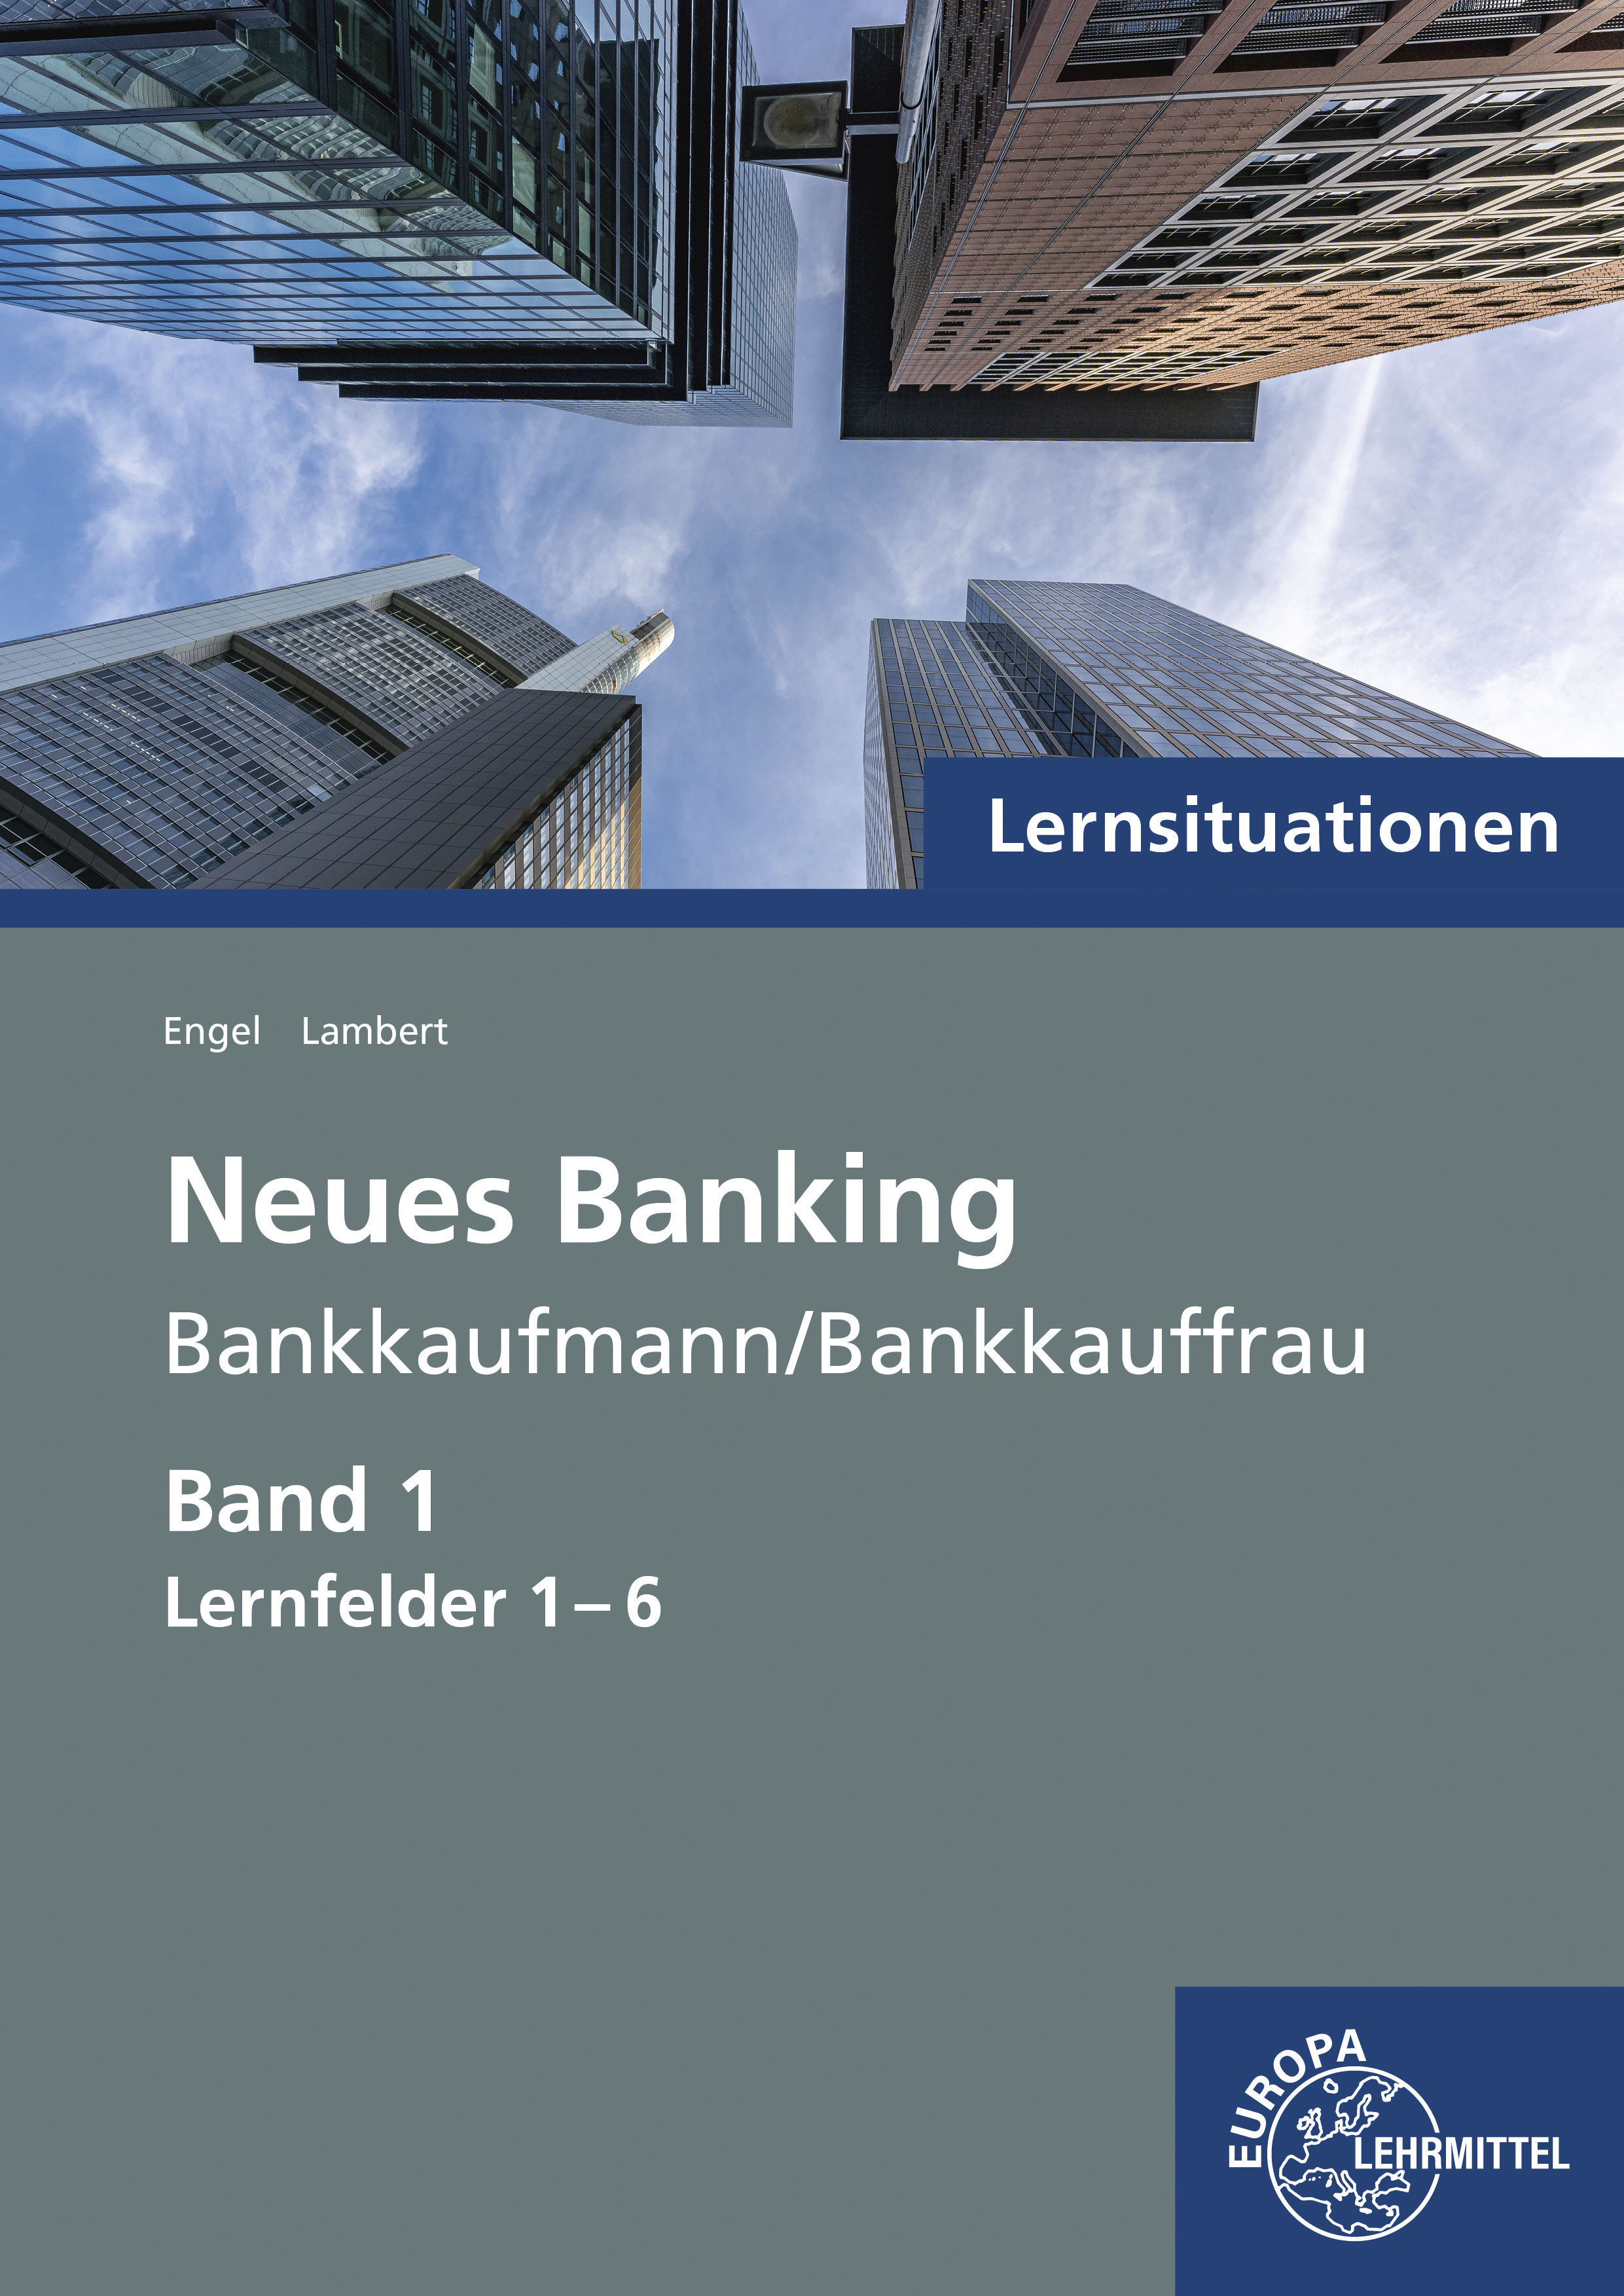 Lernsituationen Neues Banking Band 1 Lernfelder 1-6